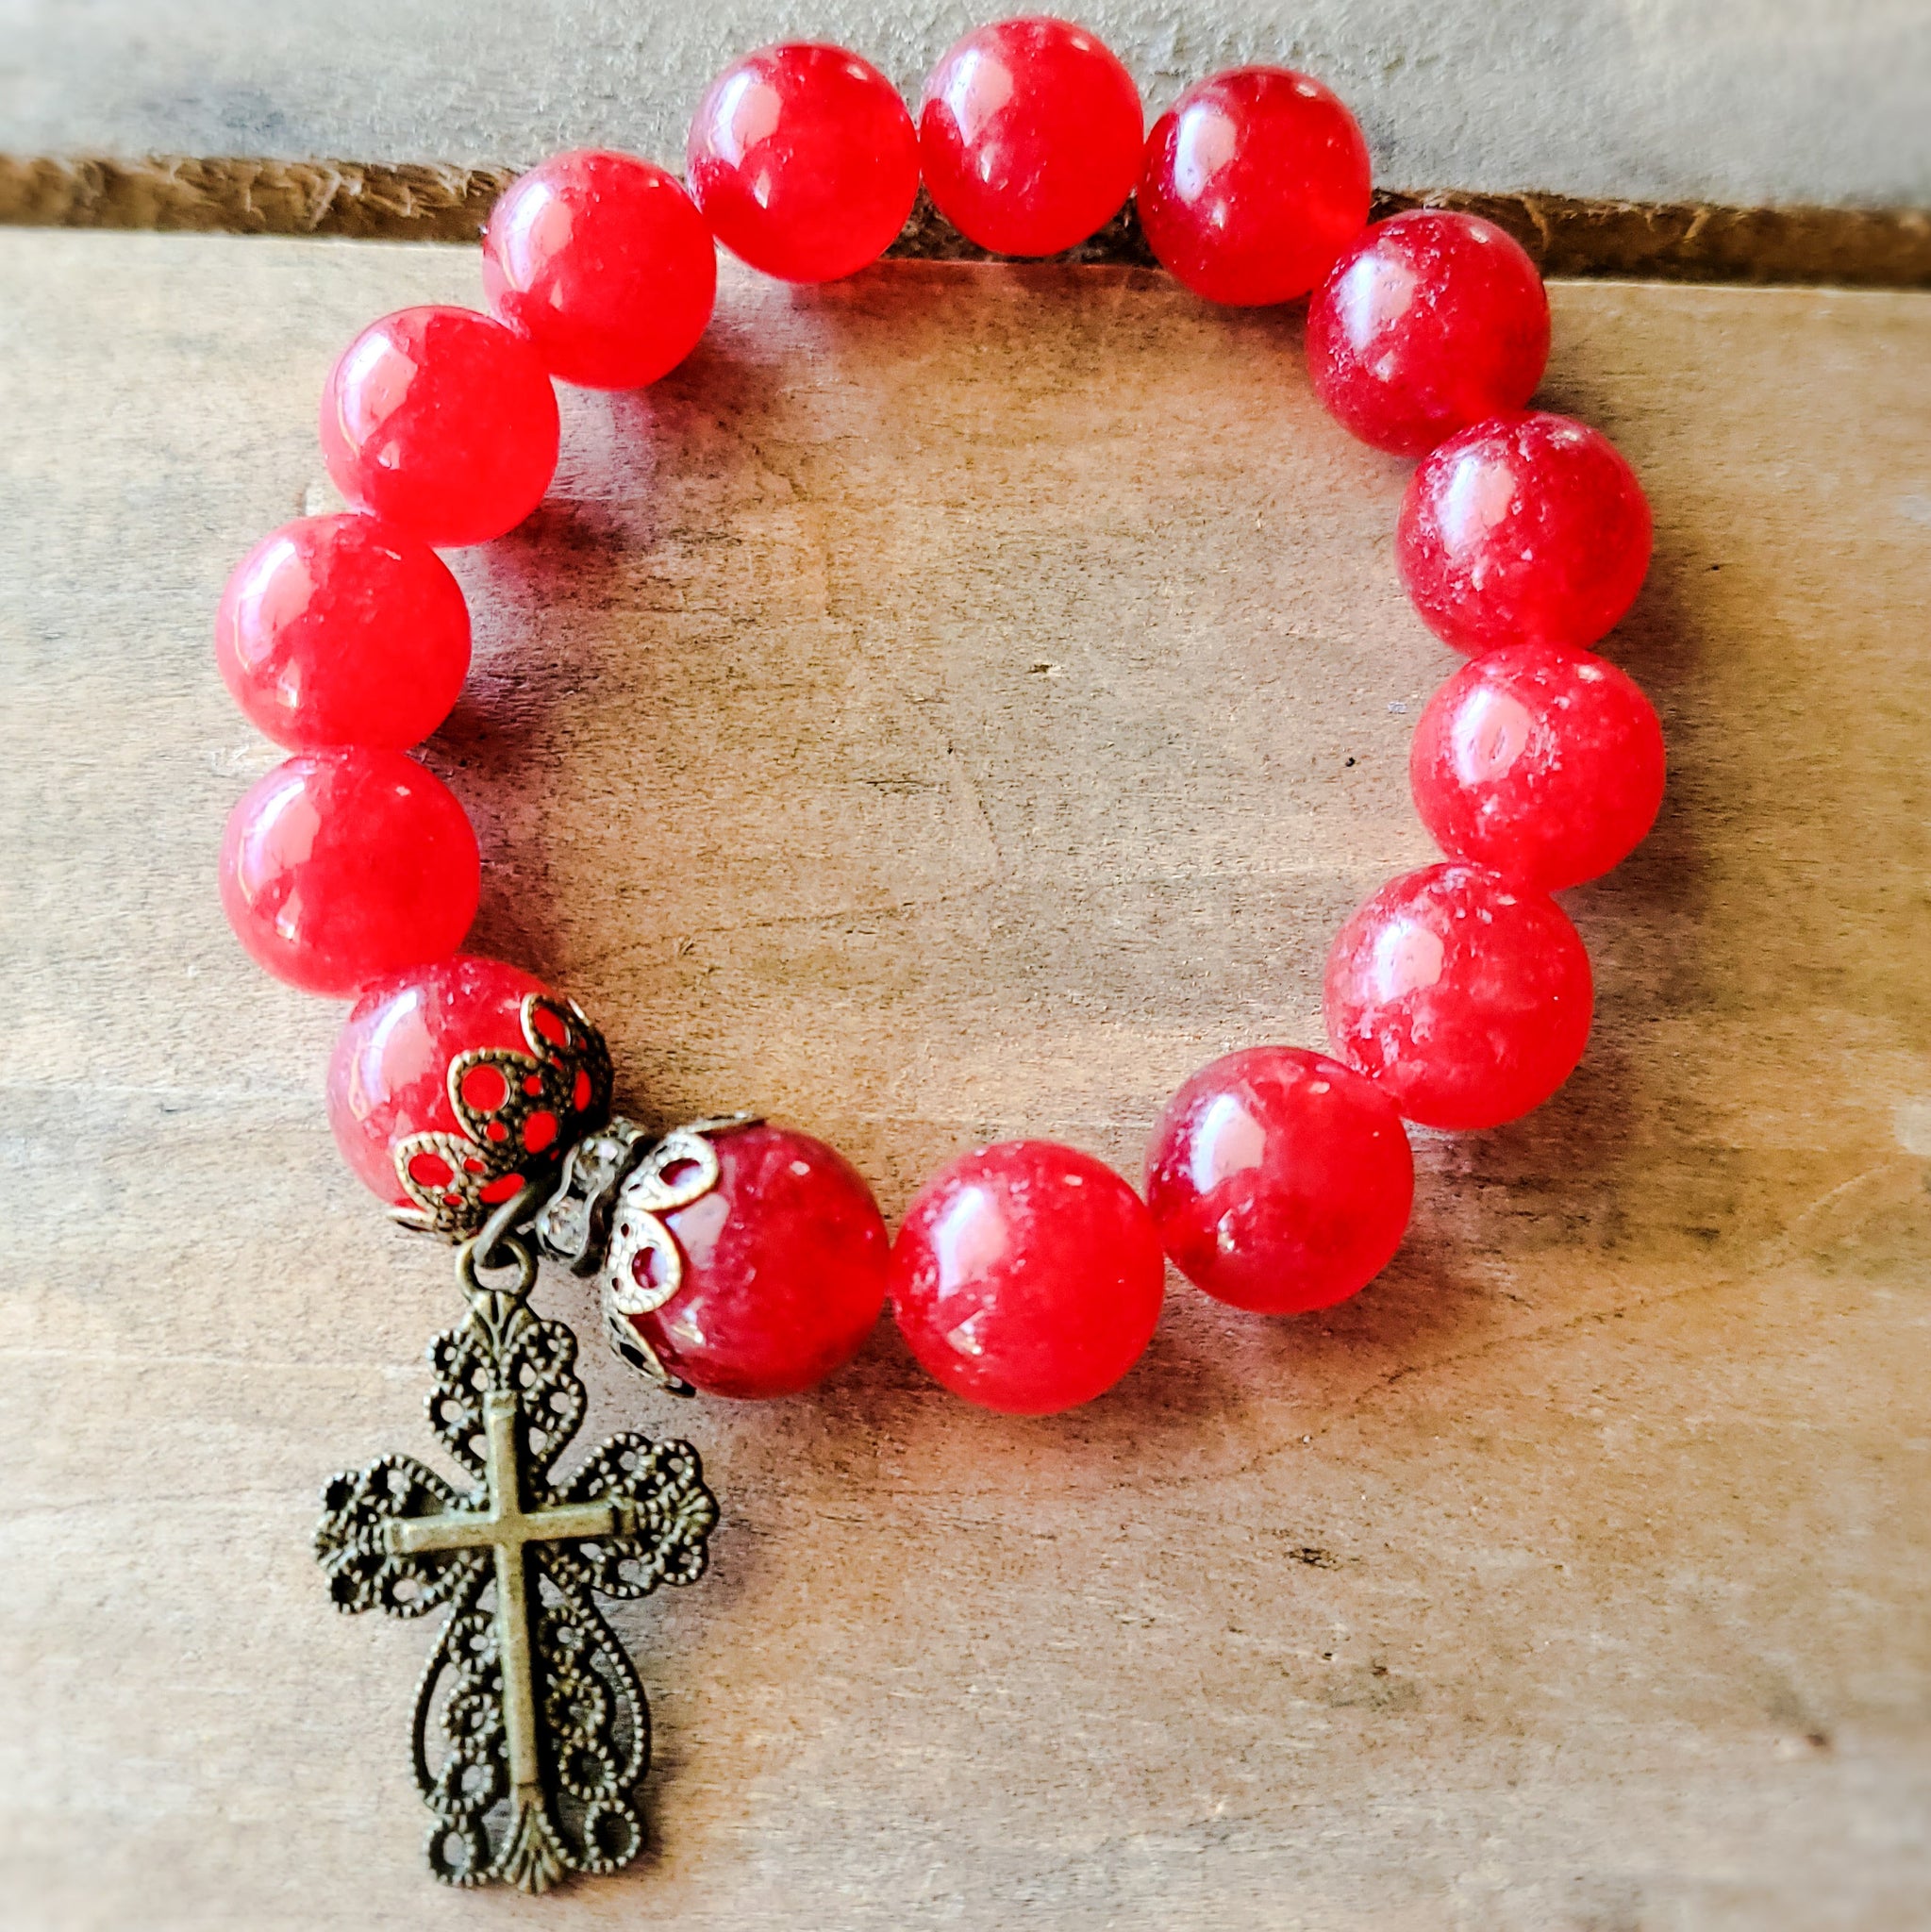 14mm red jade gemstone beads brass 1" long cross bracelet